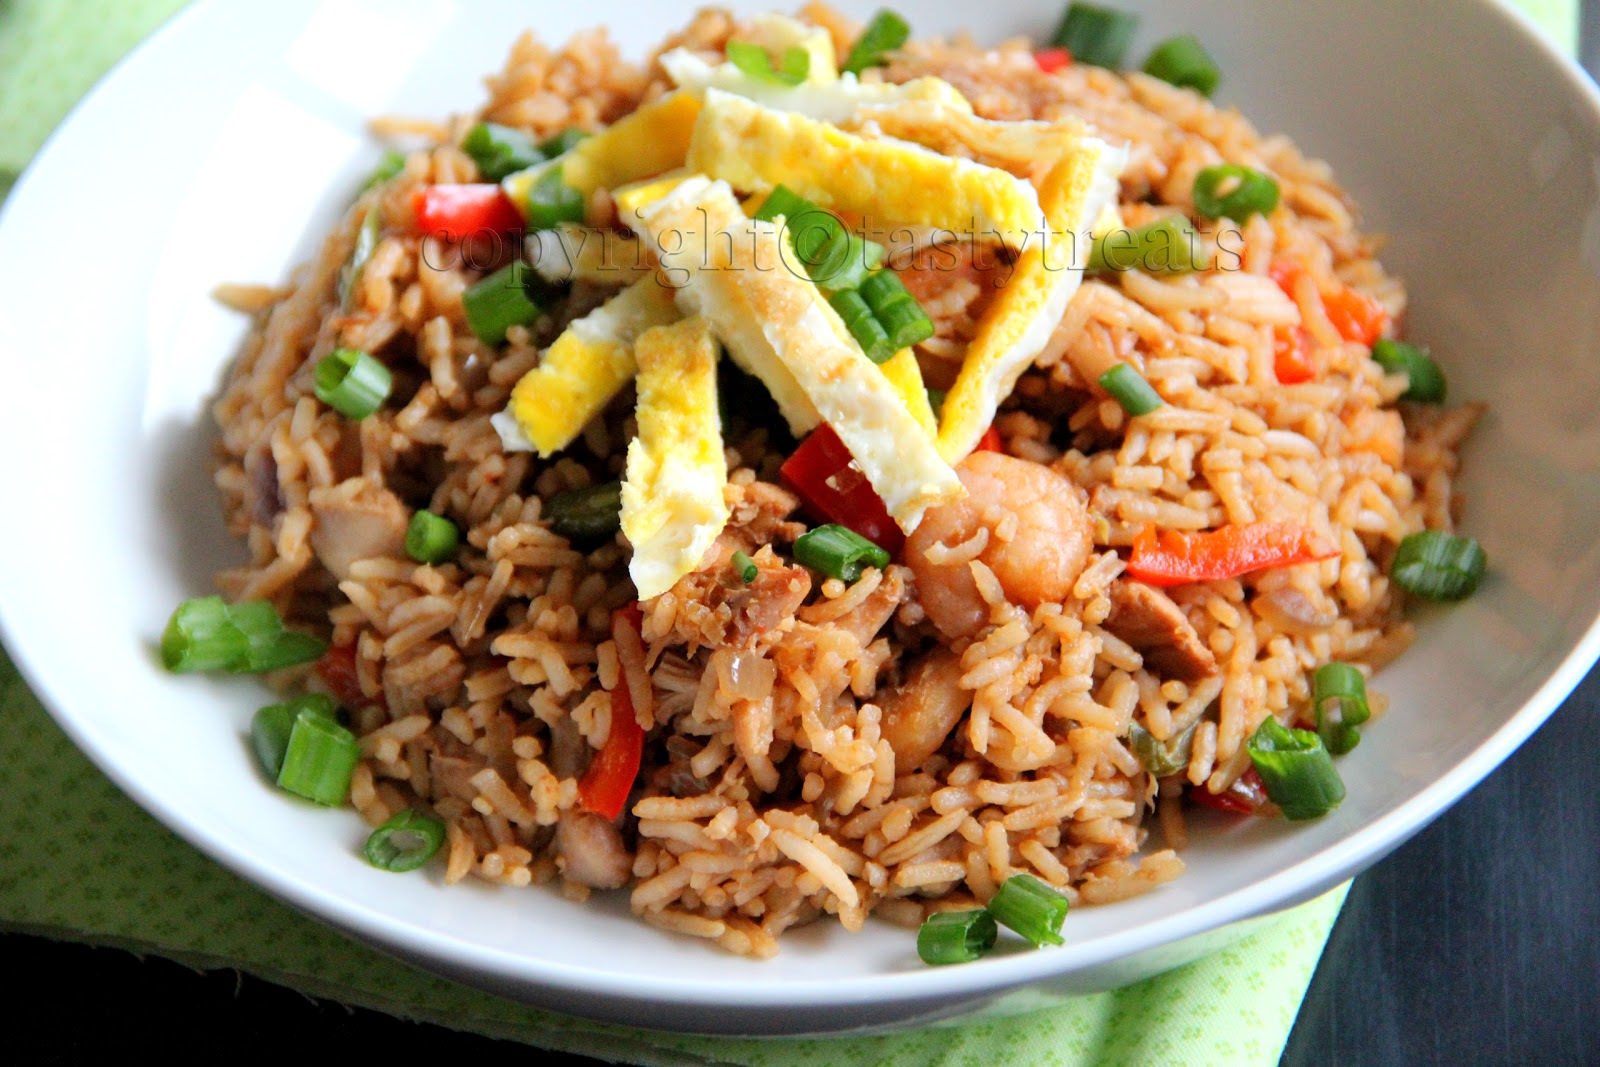 Tasty Treats: Nasi Goreng - Indonesian Fried Rice